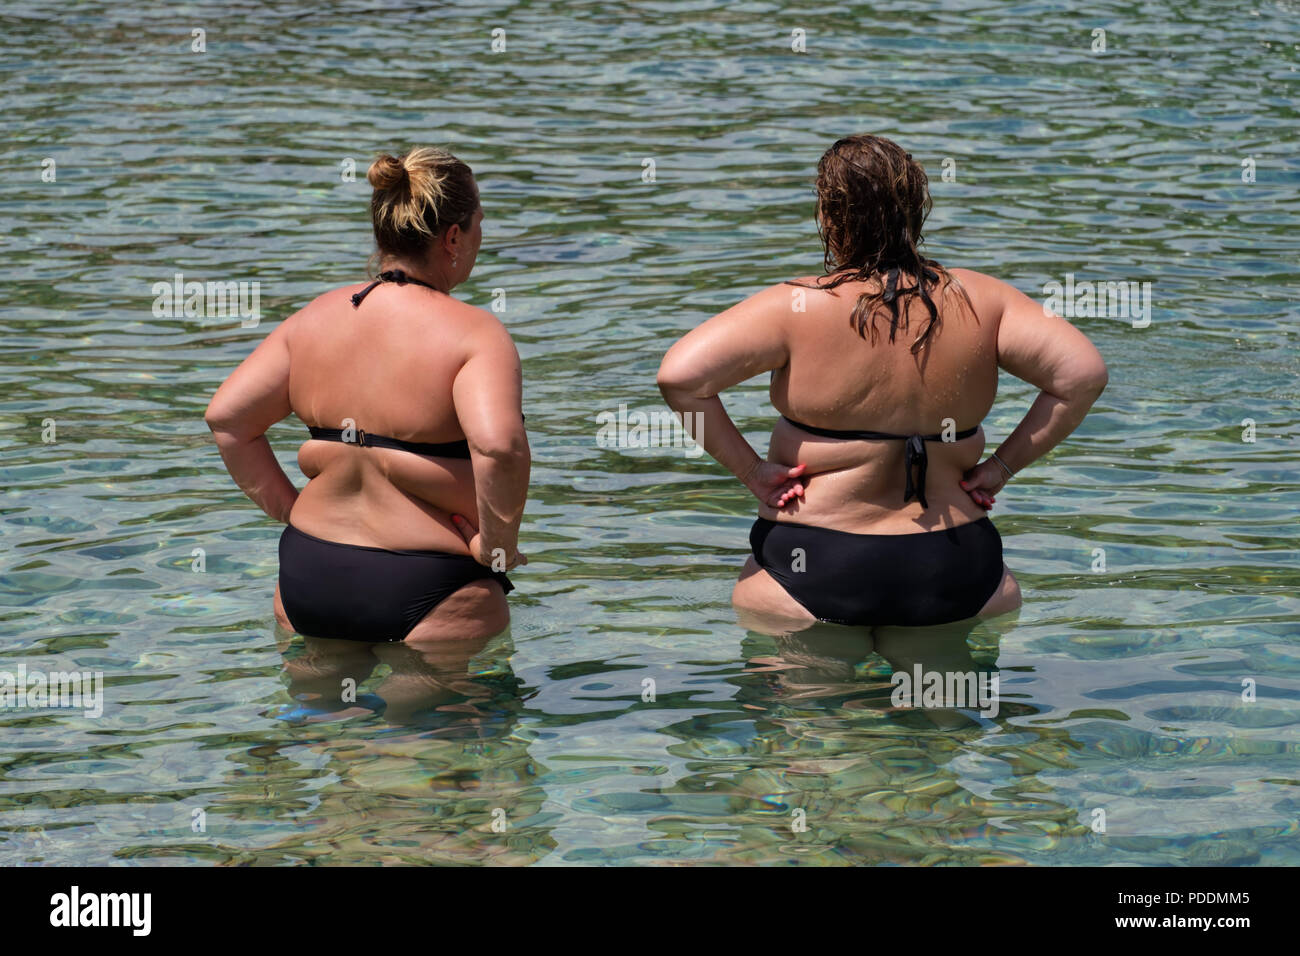 Mujeres gordas bikini fotografías e imágenes de alta resolución - Alamy